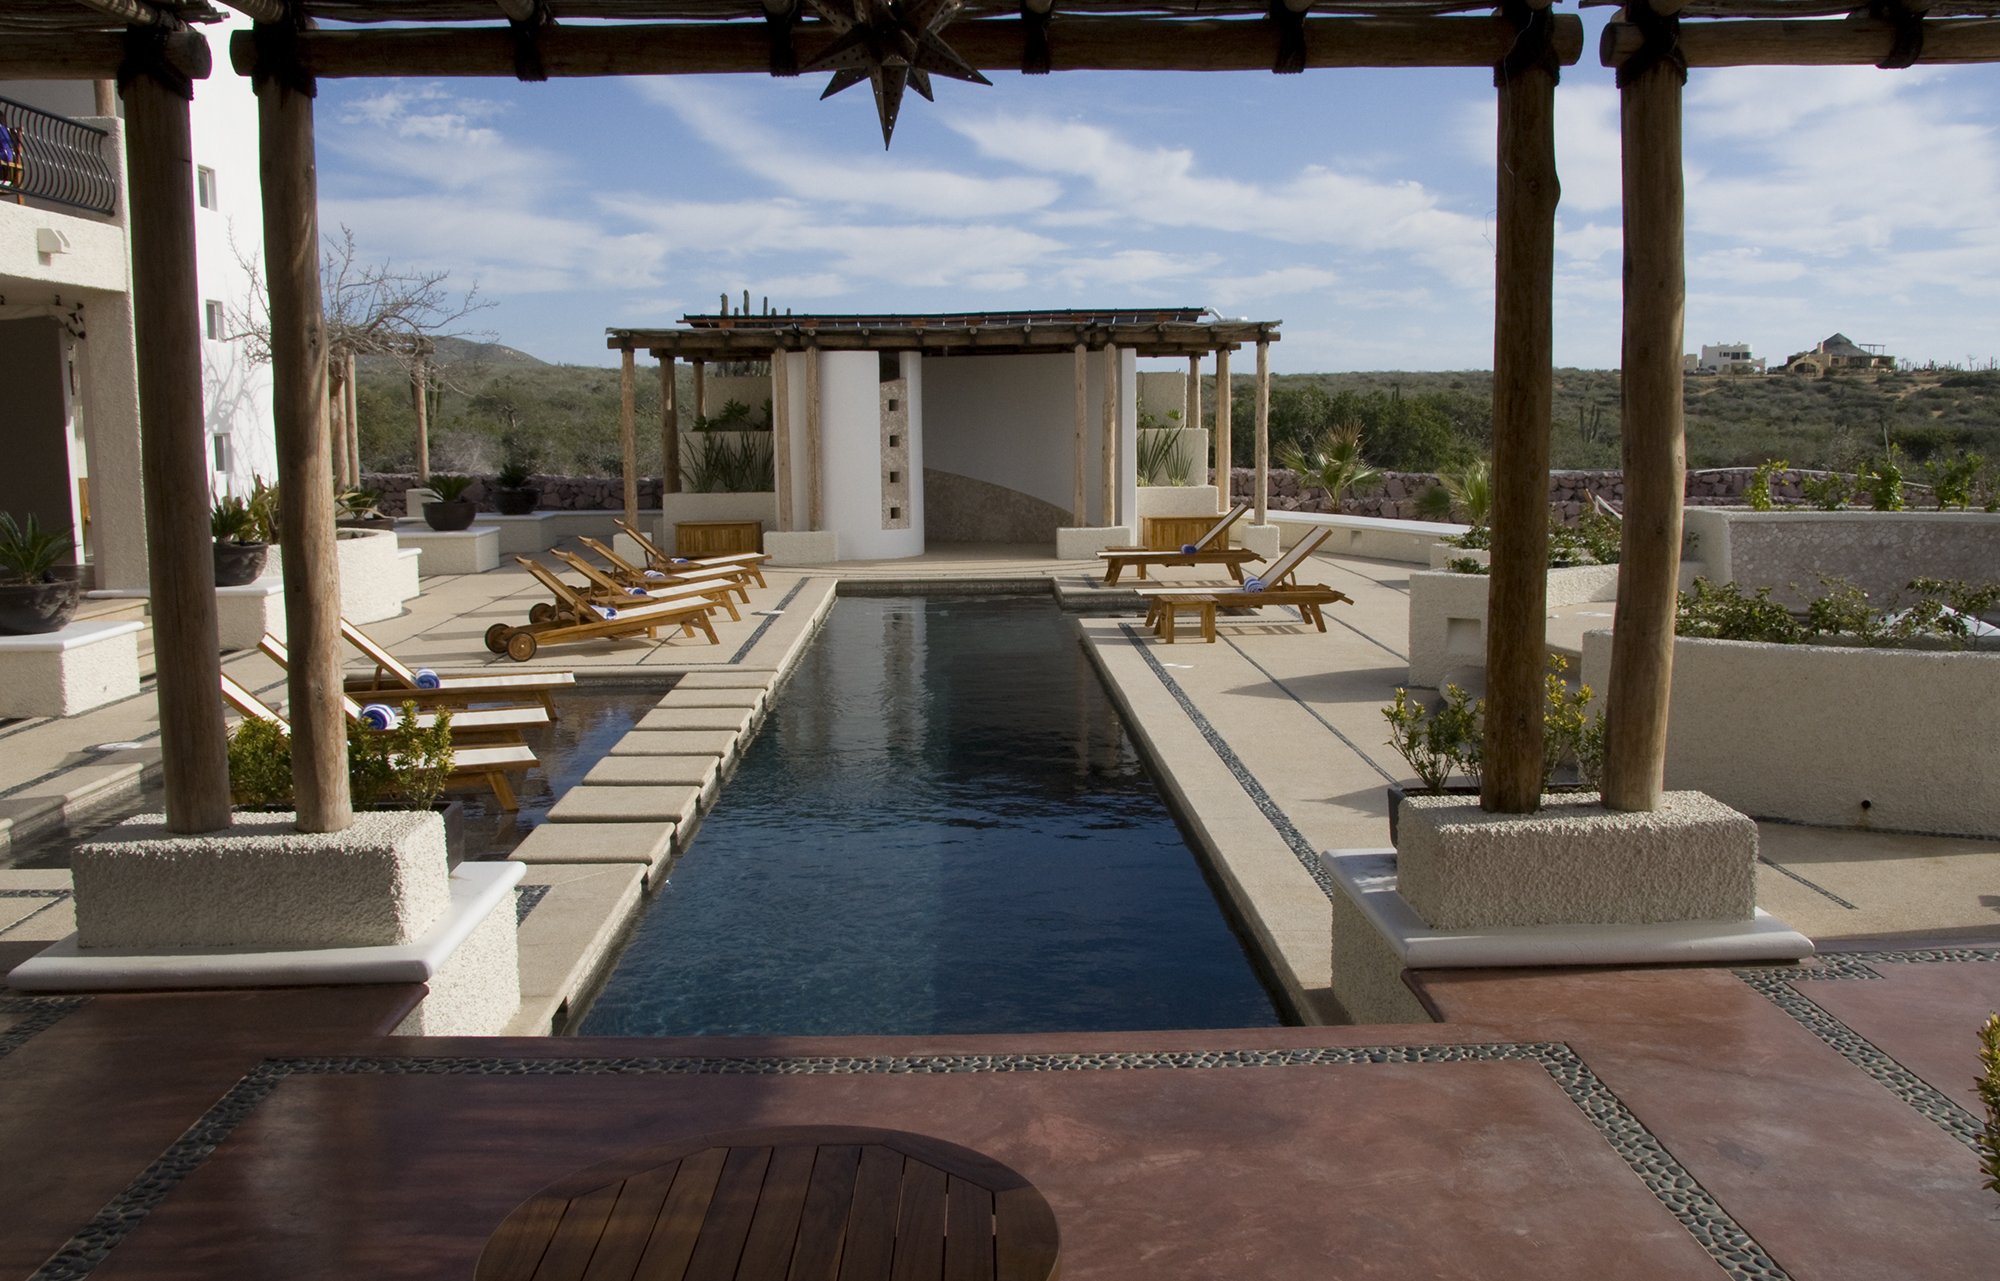 Swimming Pool at the Resort in Baja Mexico